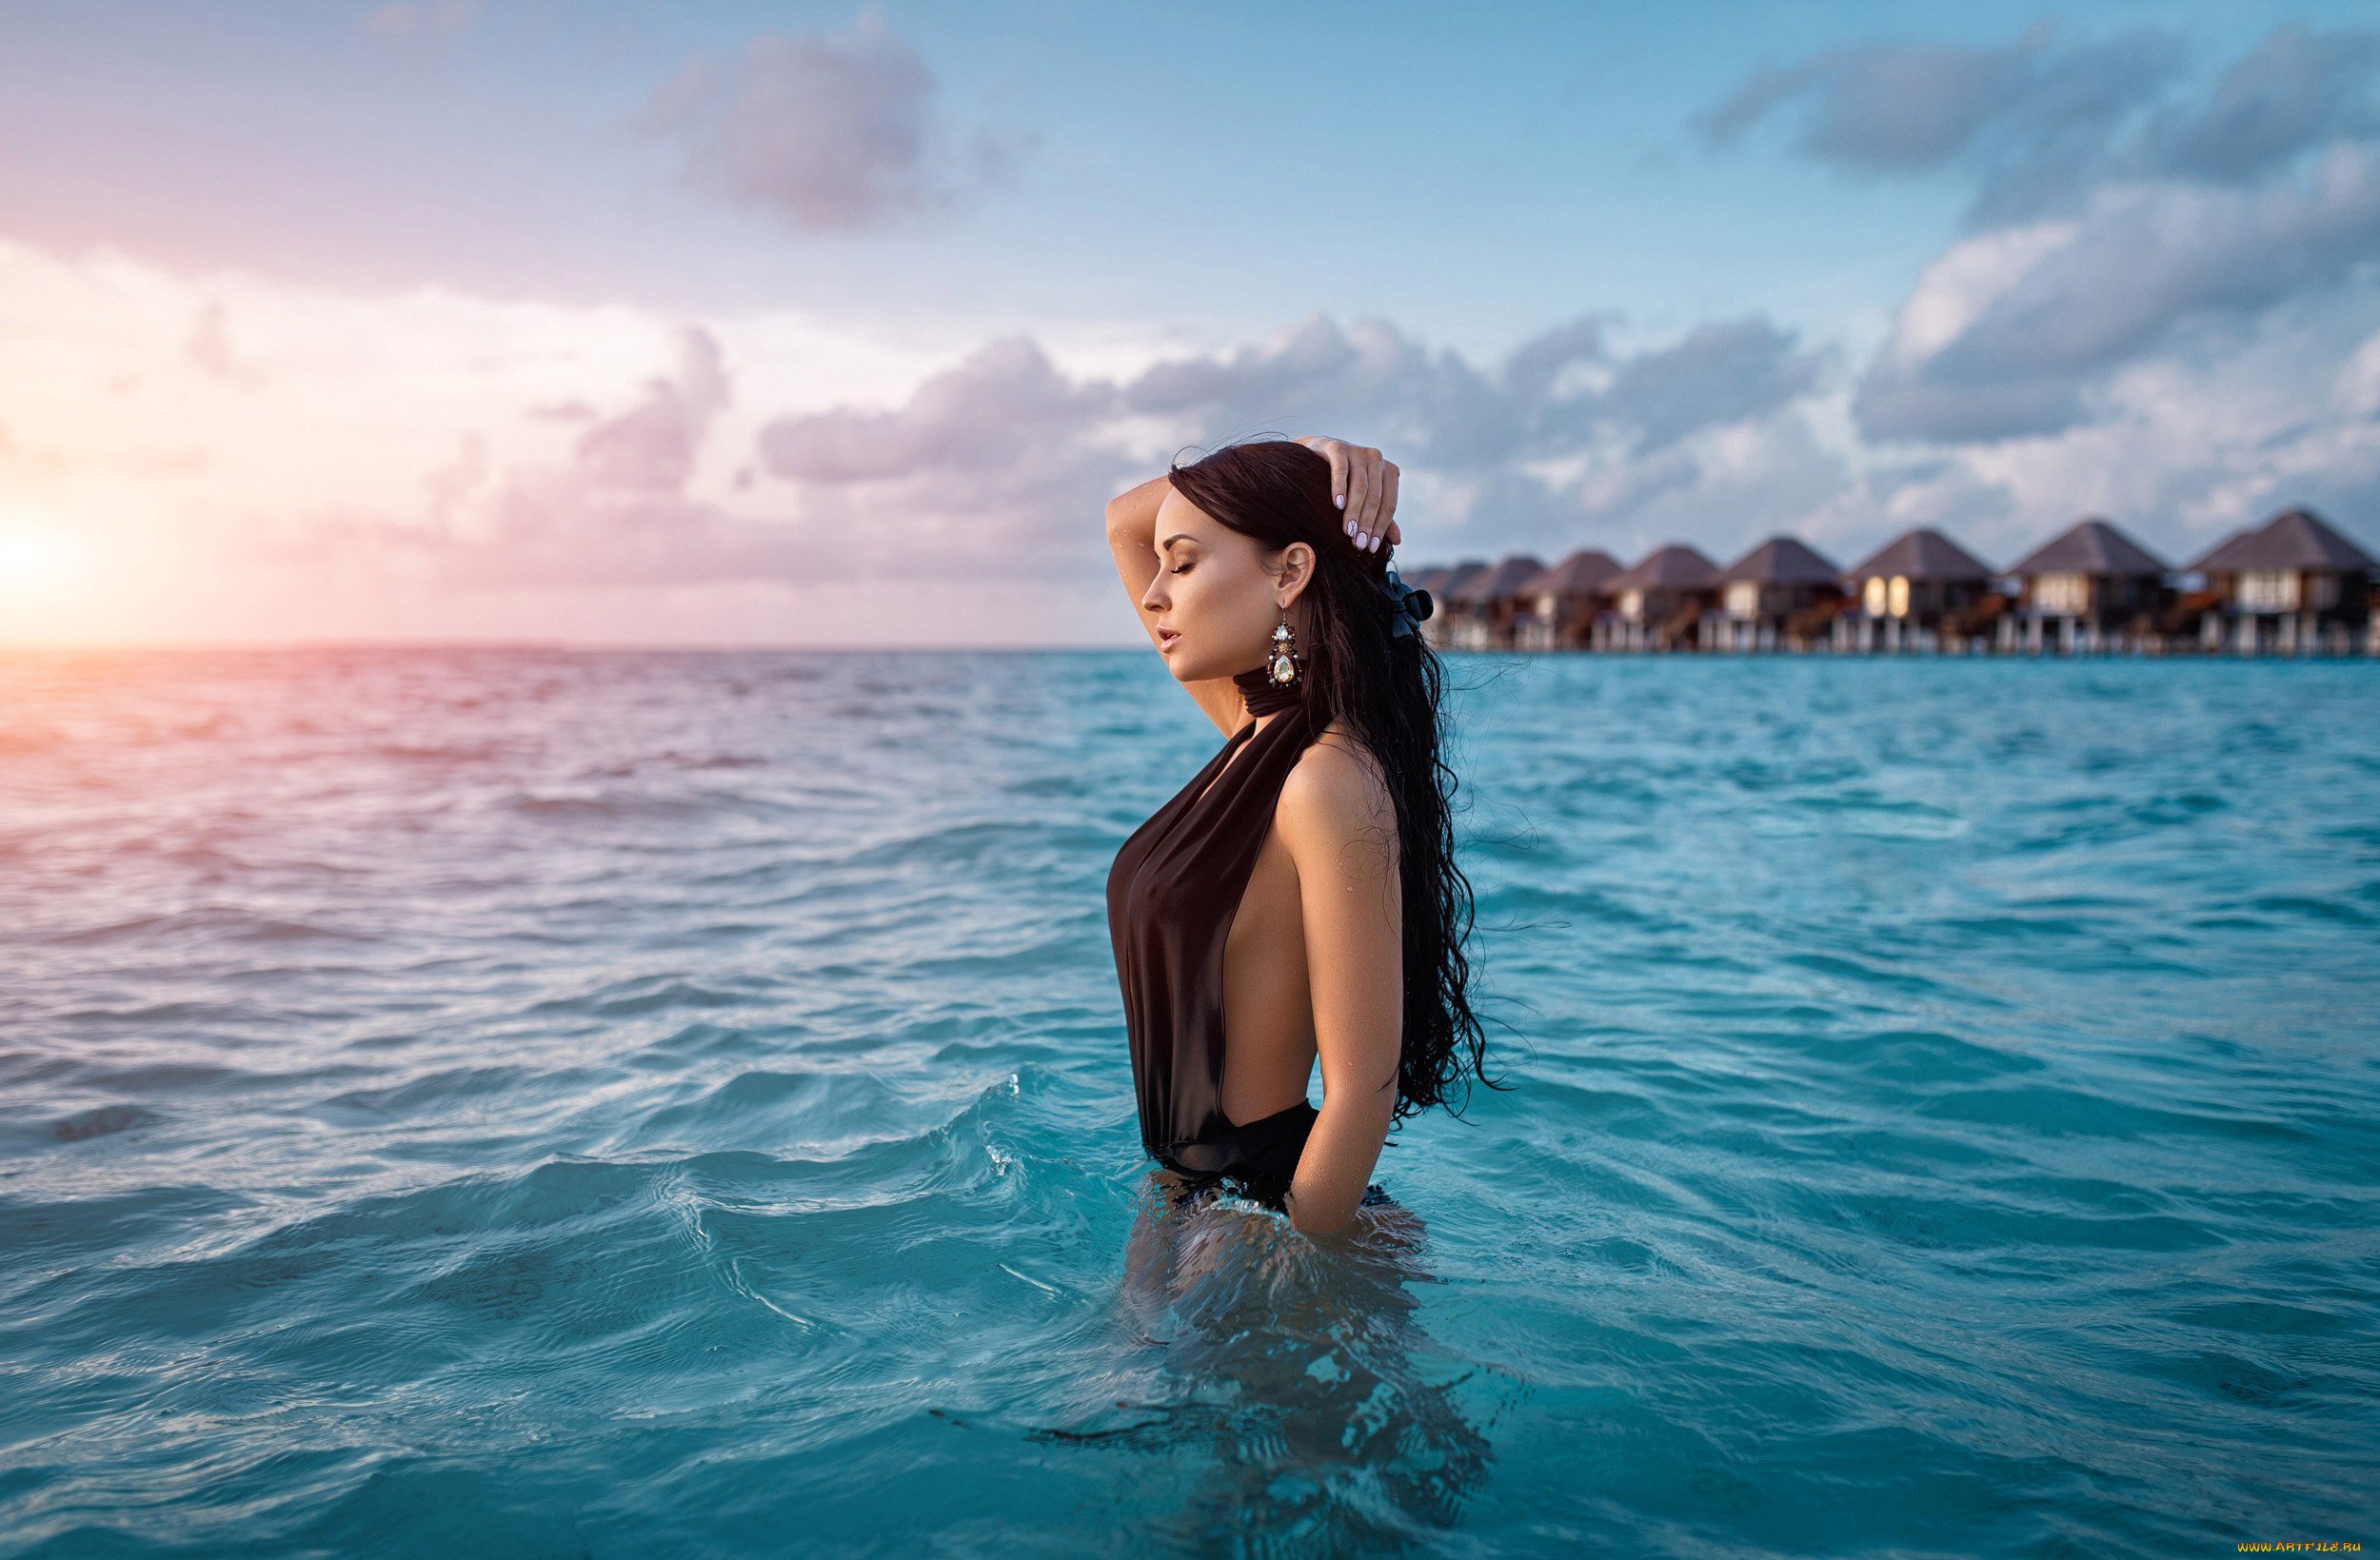 Самой молодой океан. Заставка на рабочий стол релакс. Девушка на фоне виллы на Бали. Бали пляж девушки. Релакс микс 2021.